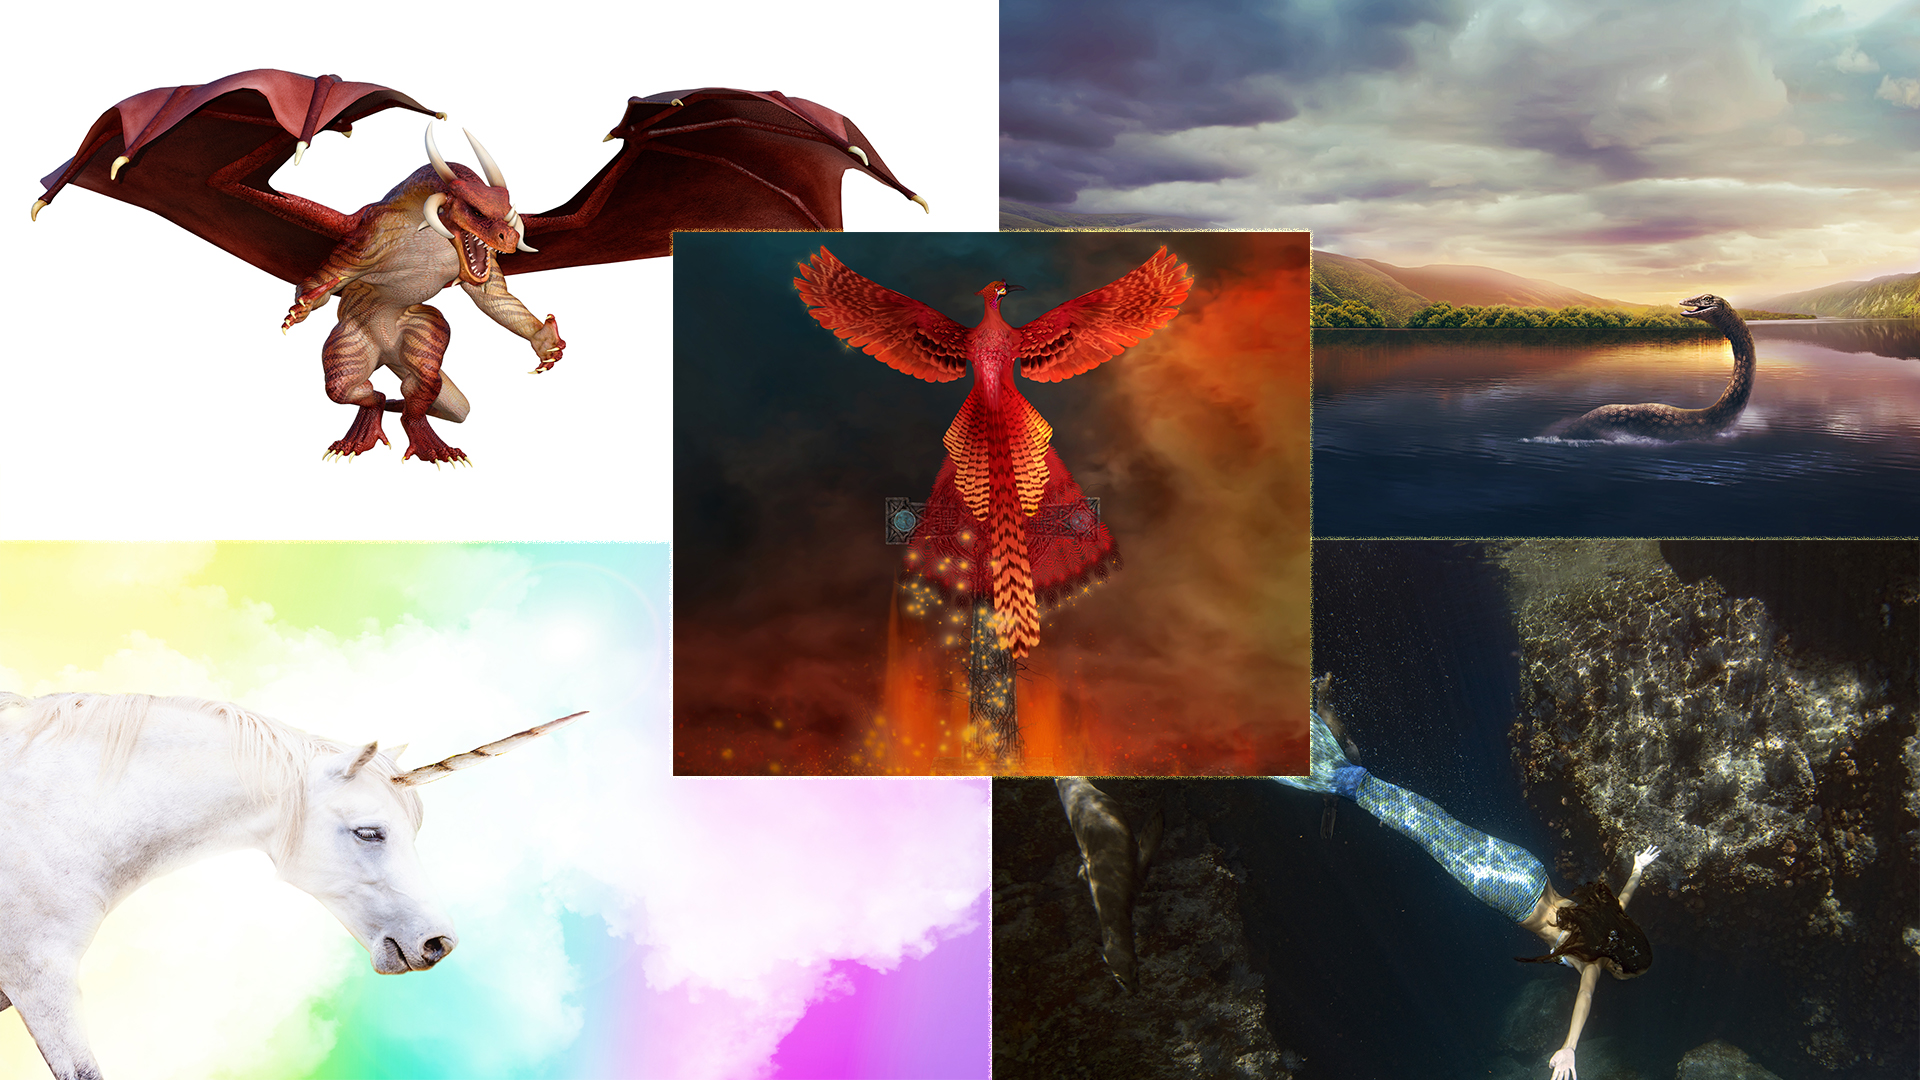 A Dragon, Loch Ness Monster, Unicorn, Mermaid, Phoenix